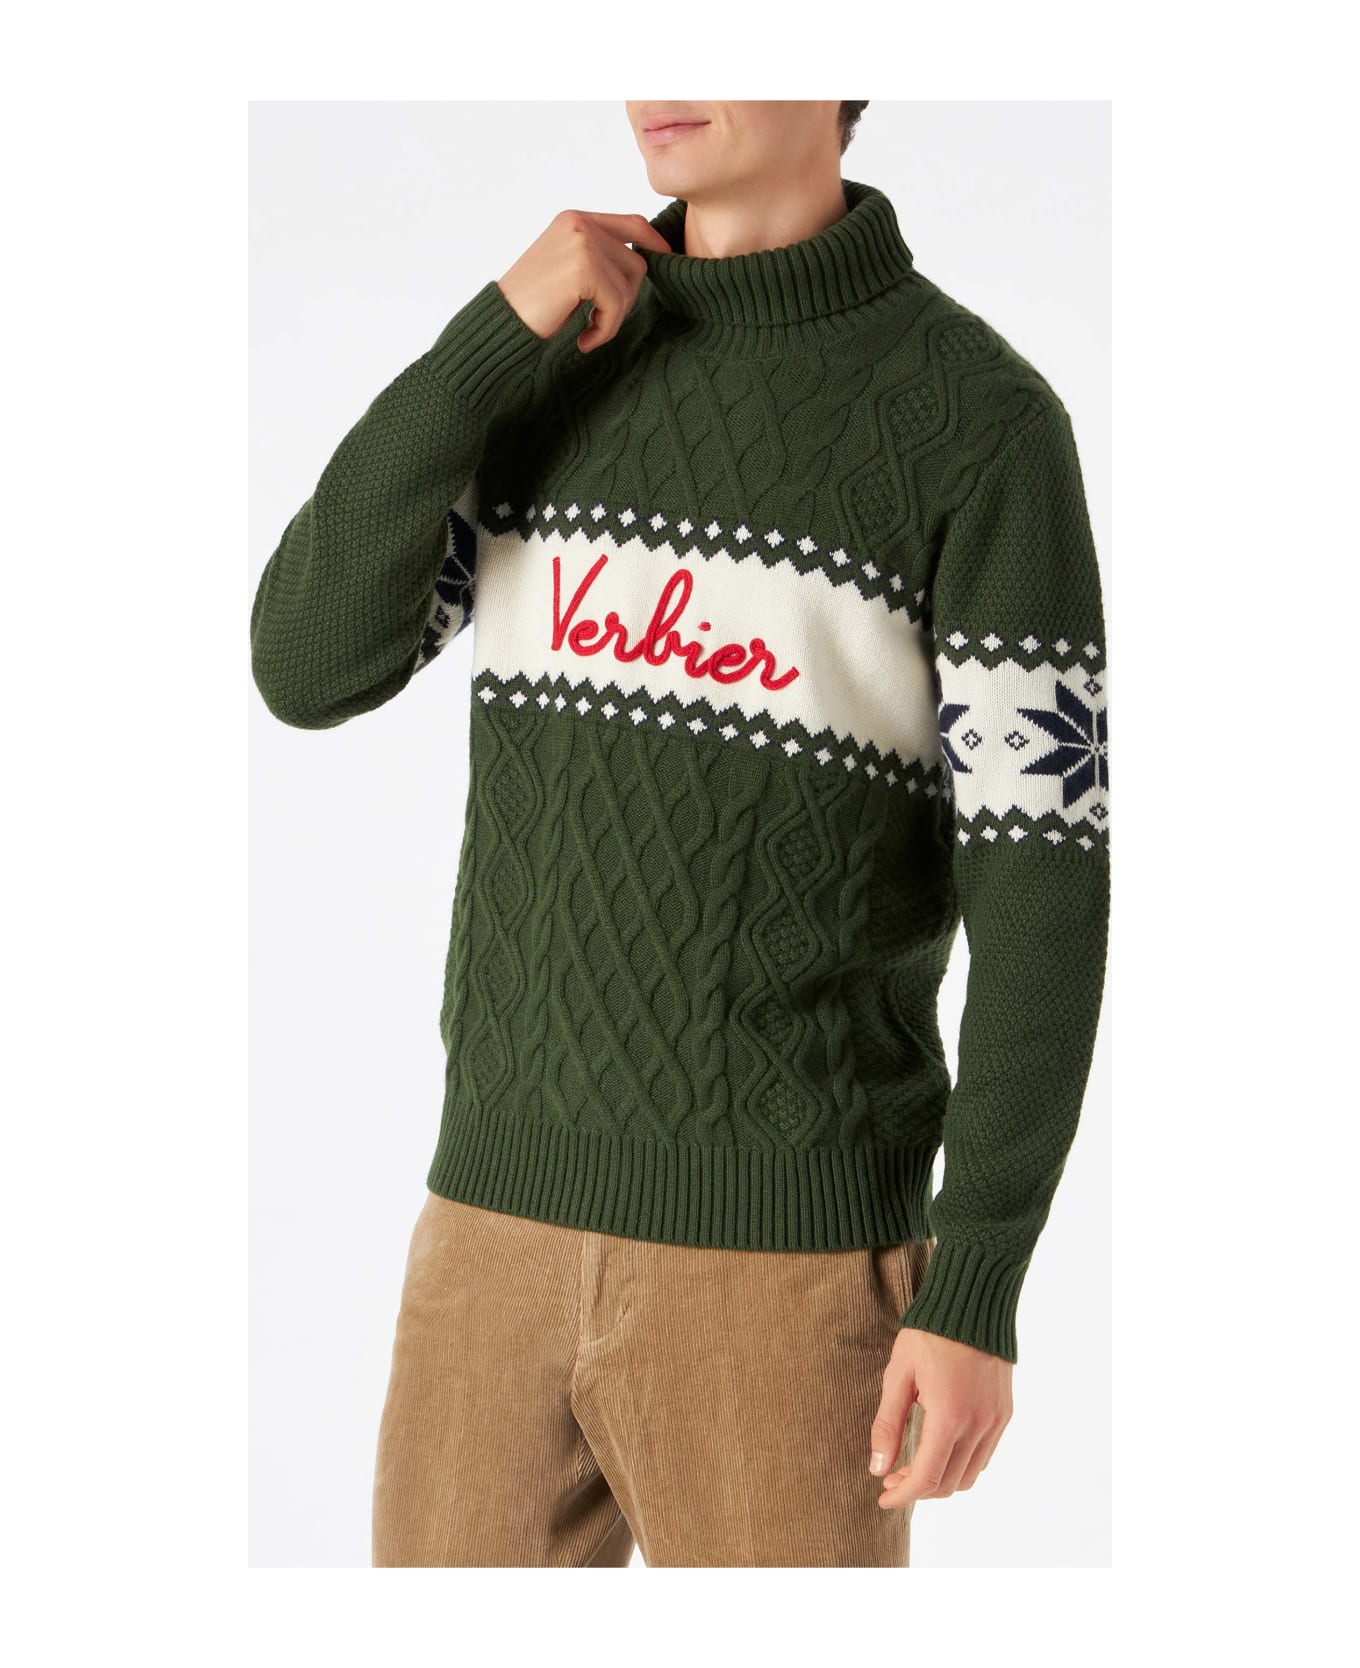 MC2 Saint Barth Half-turtleneck Sweater With Verbier Lettering - GREEN